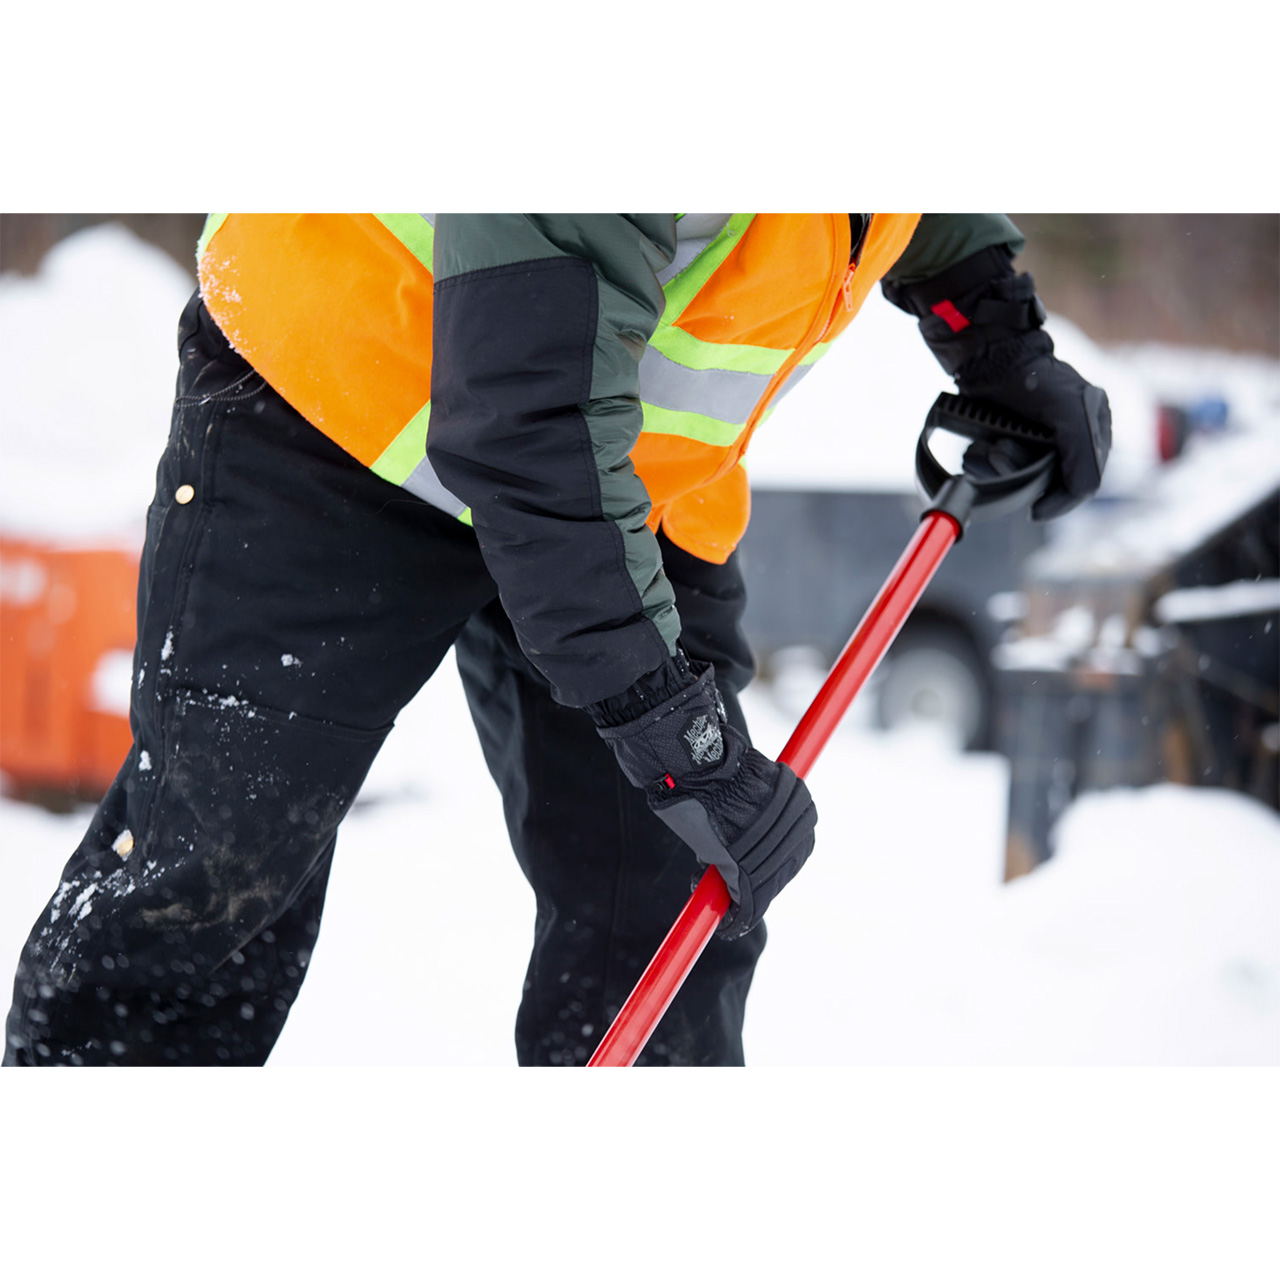 Mechanix Wear ColdWork Peak Waterproof Winter Gloves - Penn Tool